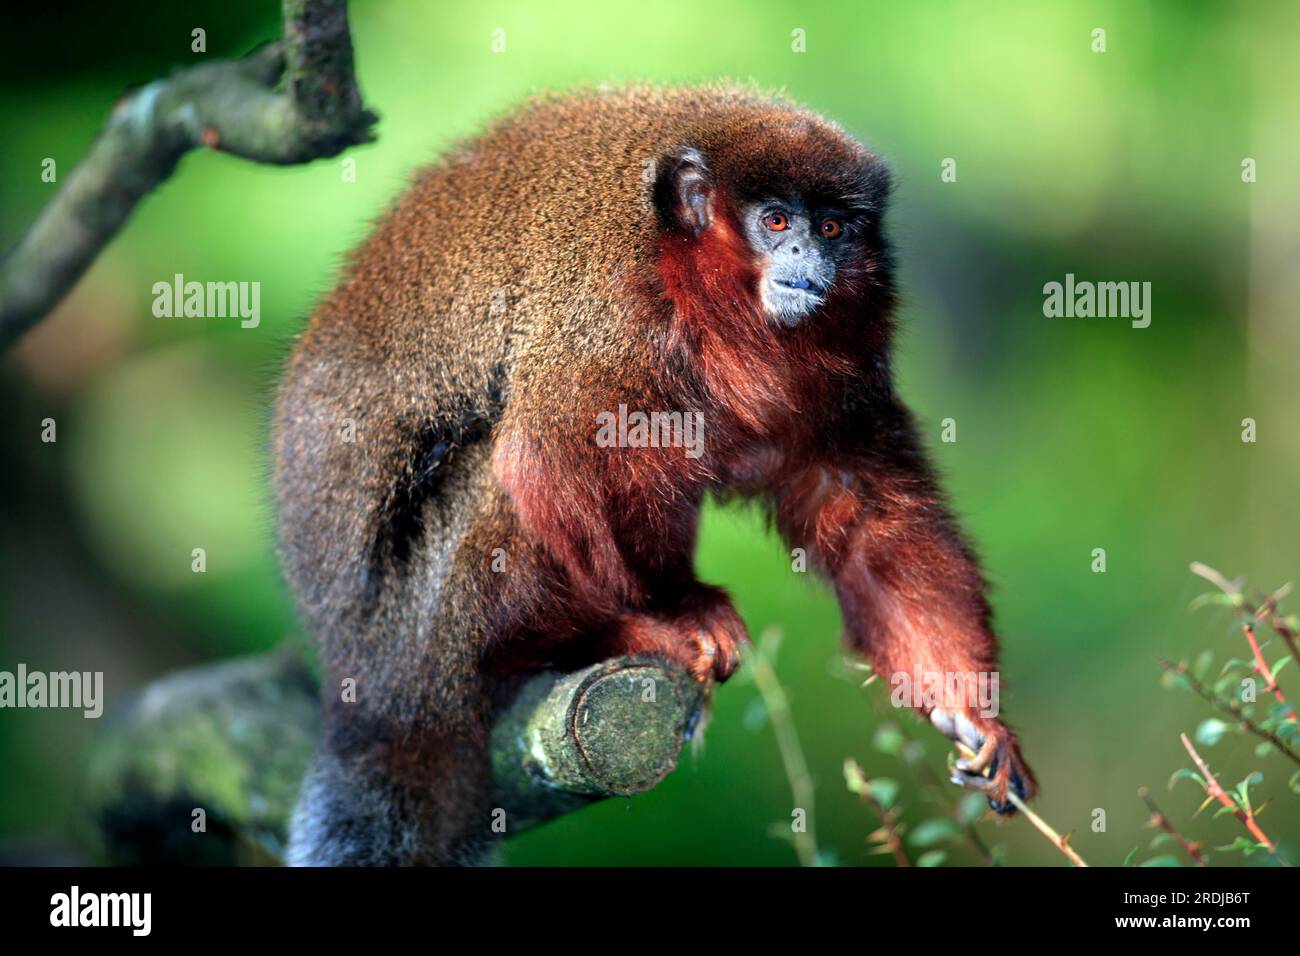 Red-bellied titi (Callicebus moloch), South America, adult, on tree Dusky titi monkey, South America Dusky titi monkey, South America, adult, on tree Stock Photo